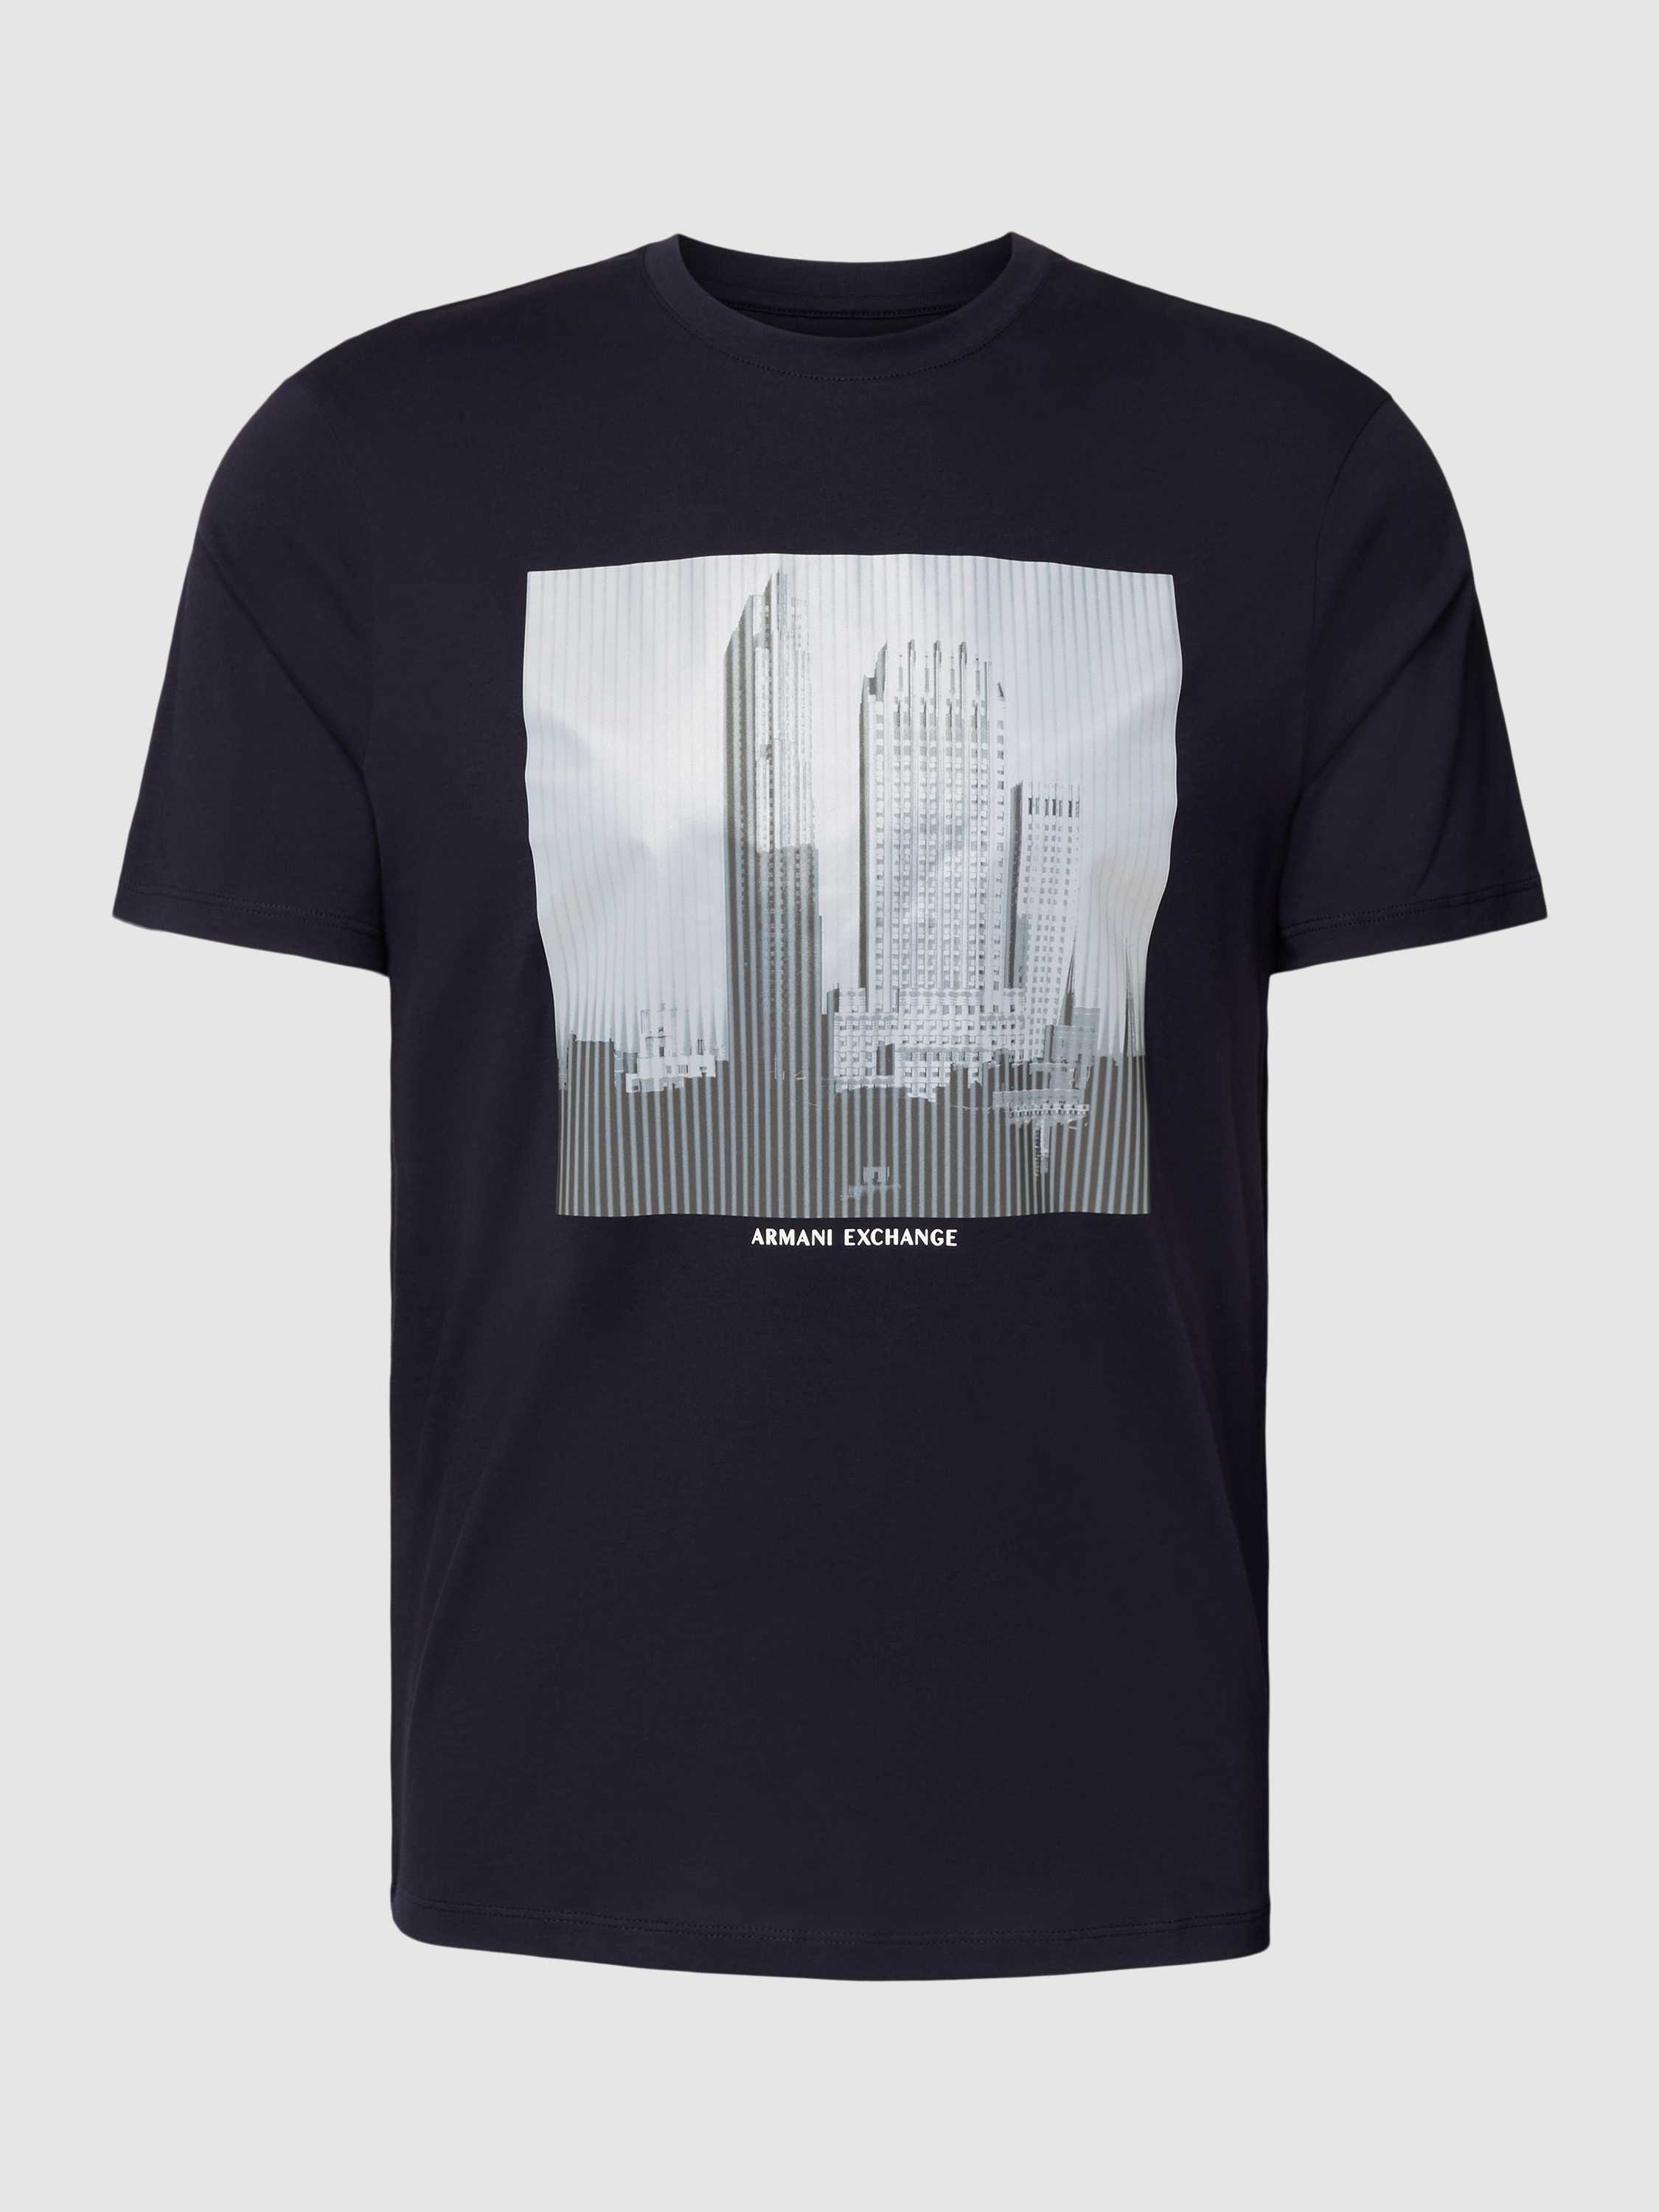 Armani Exchange Skyscraper Cotton-Jersey T-Shirt - S